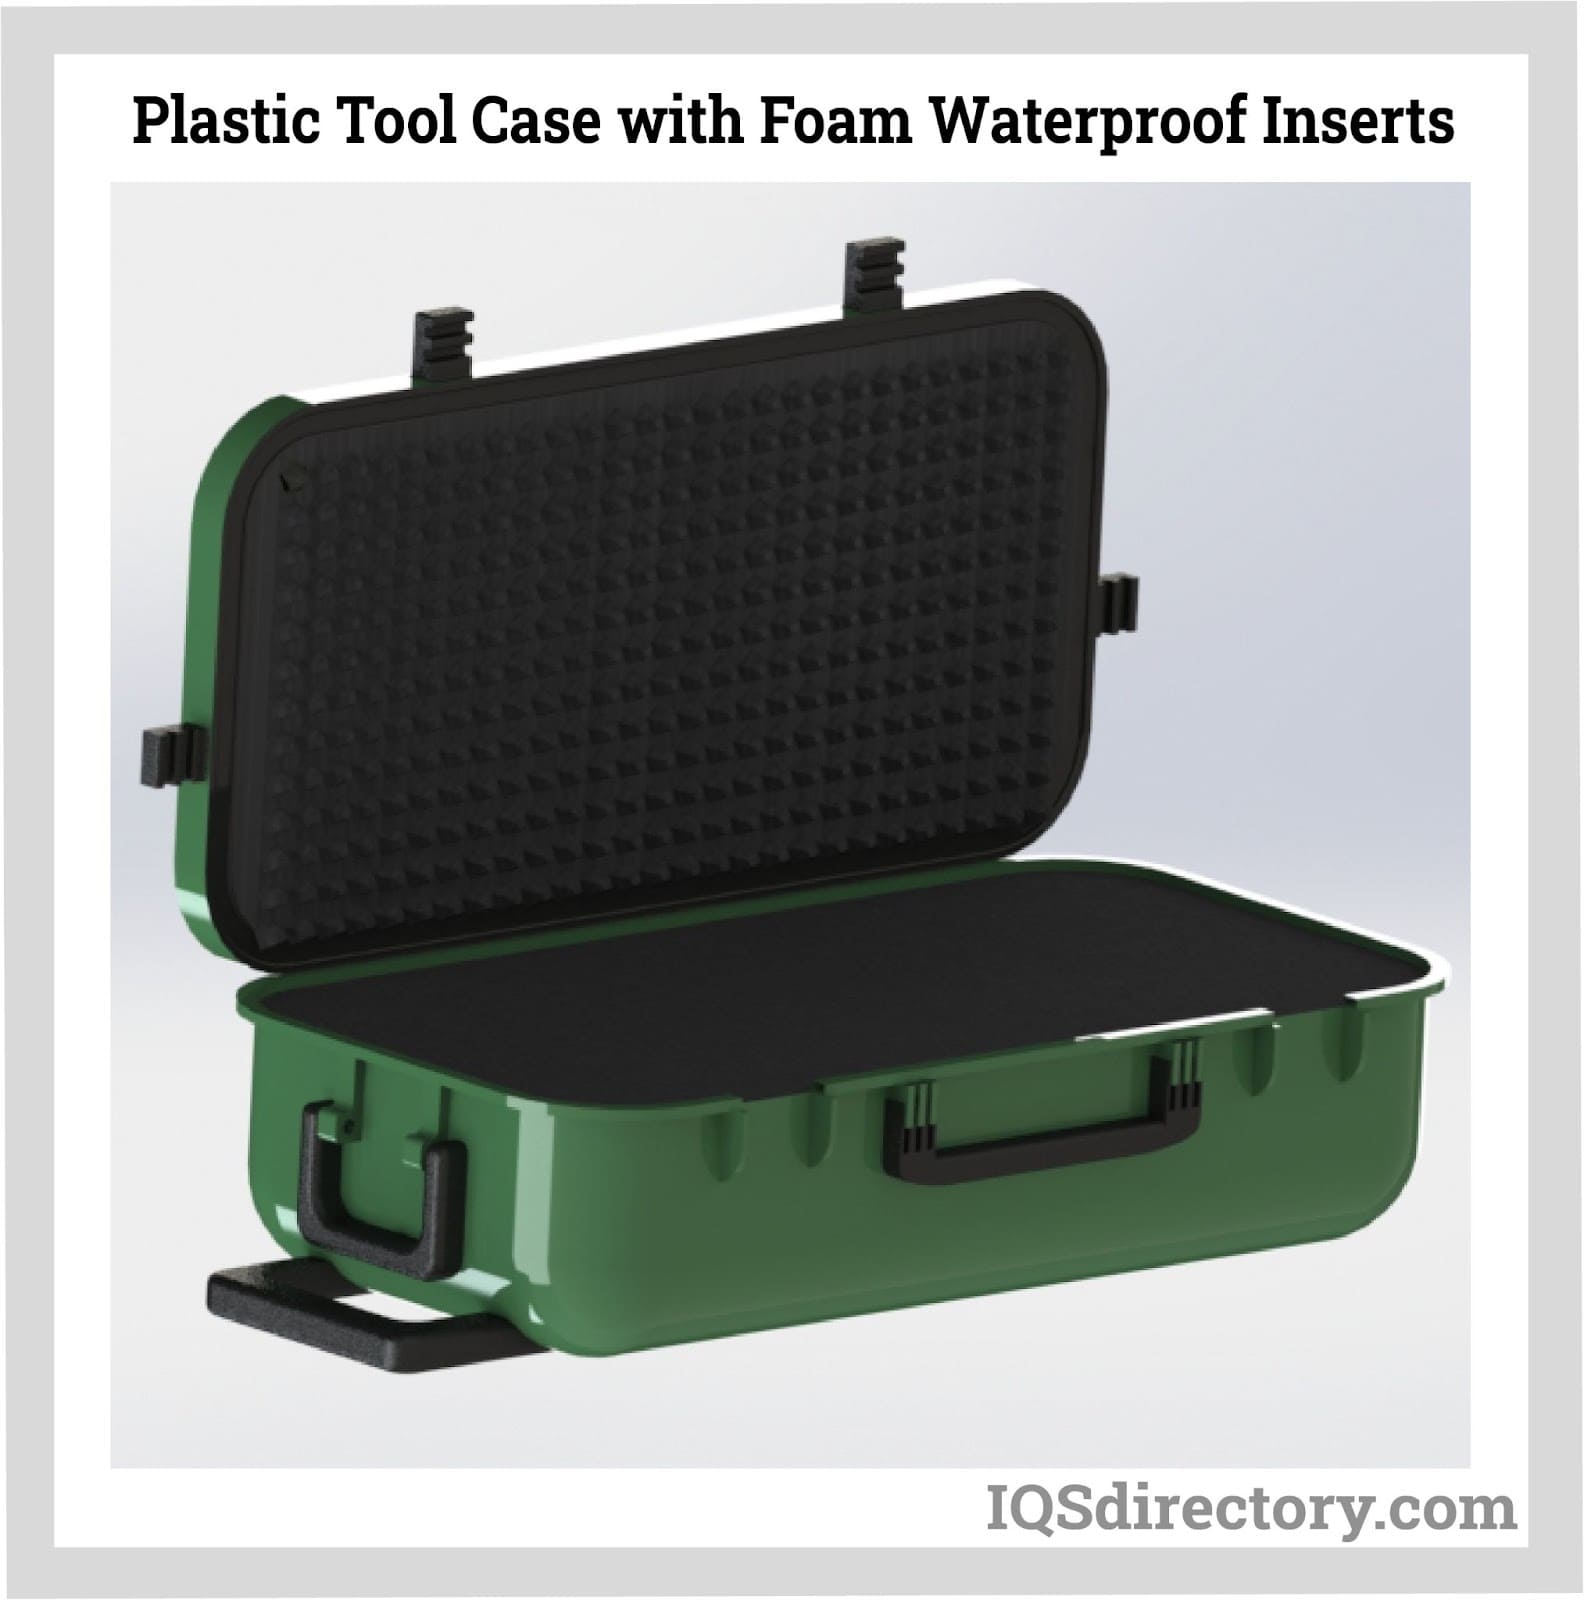 Plastic Tool Case with Foam Waterproof Inserts